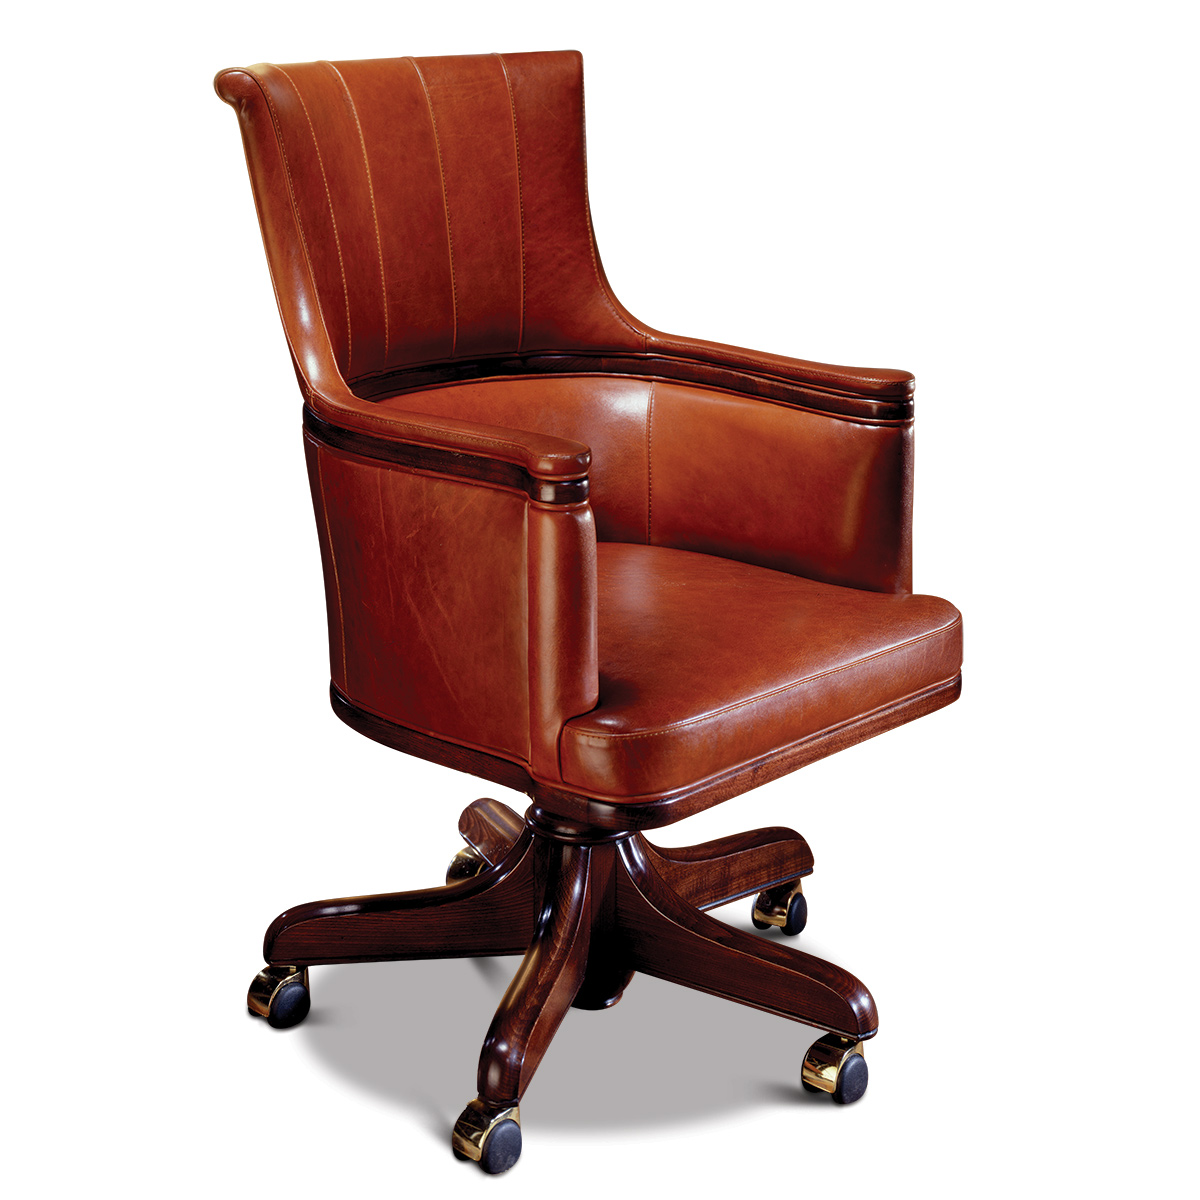 Office armchair “REAGAN” made in italy su misura